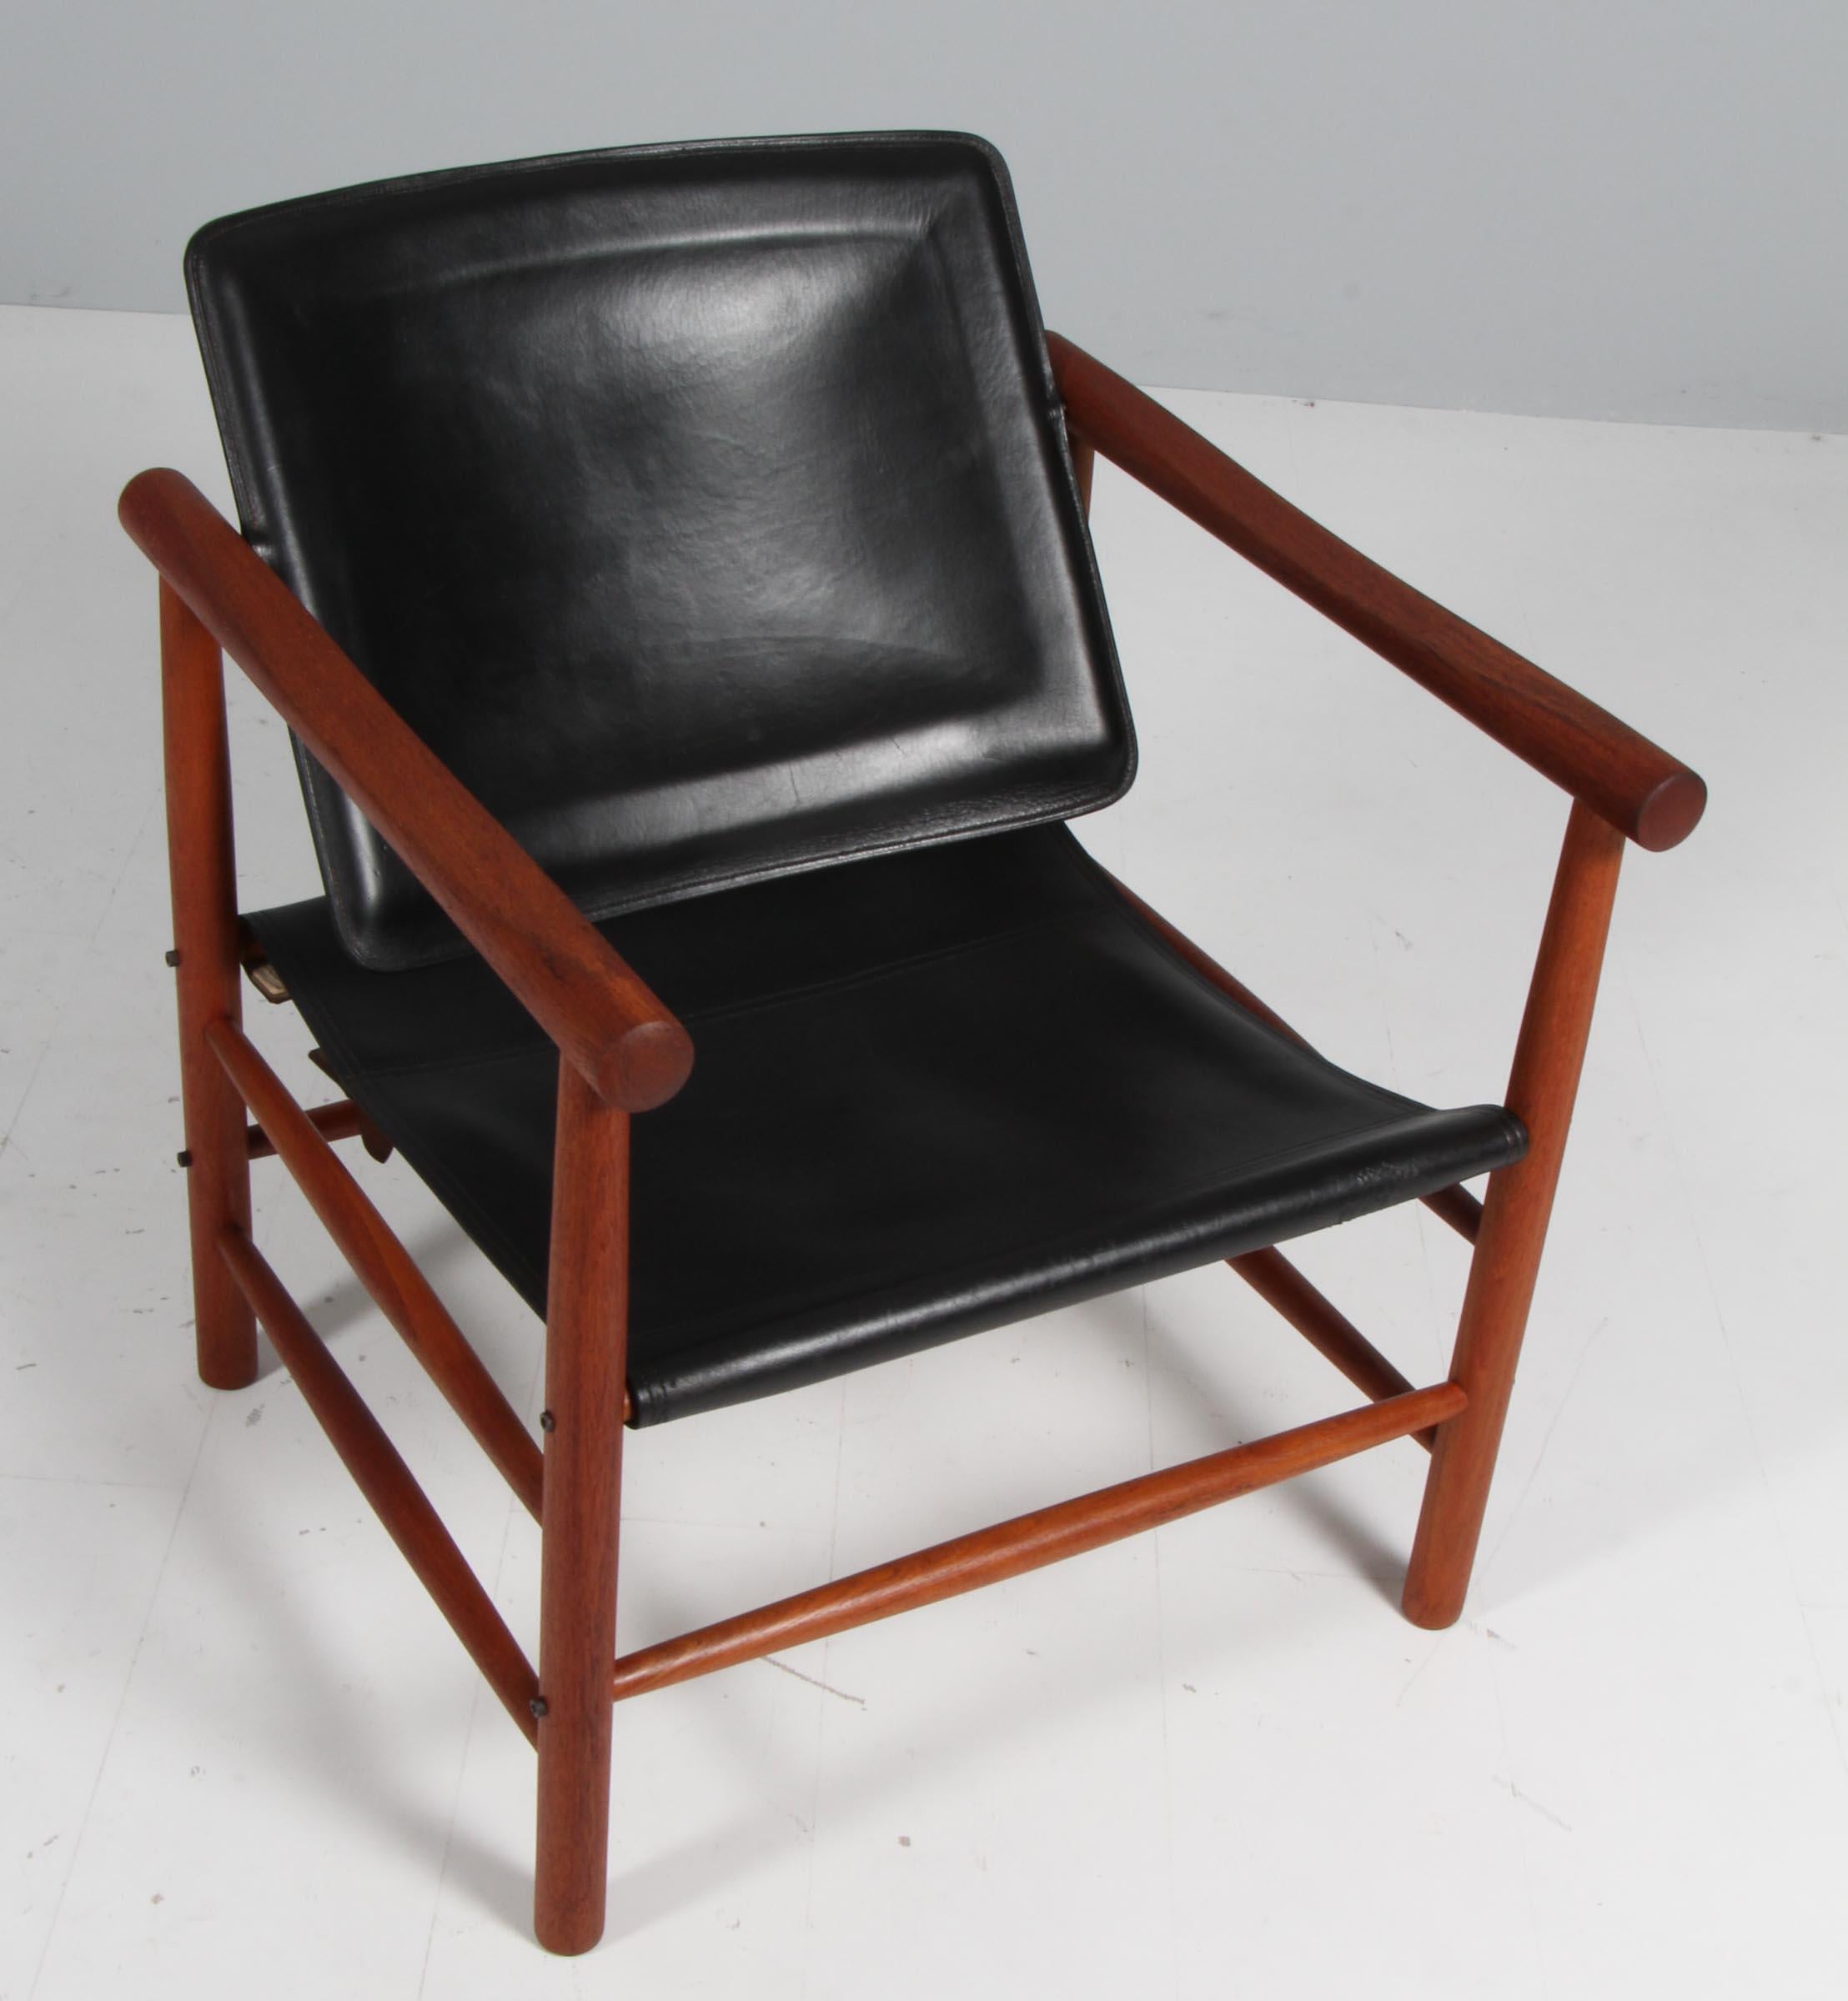 Kai Lyngfeldt Larsen lounge chair in solid tea.

Original upholstery of black saddle leather.

Model 506, made by Søborg Møbler.